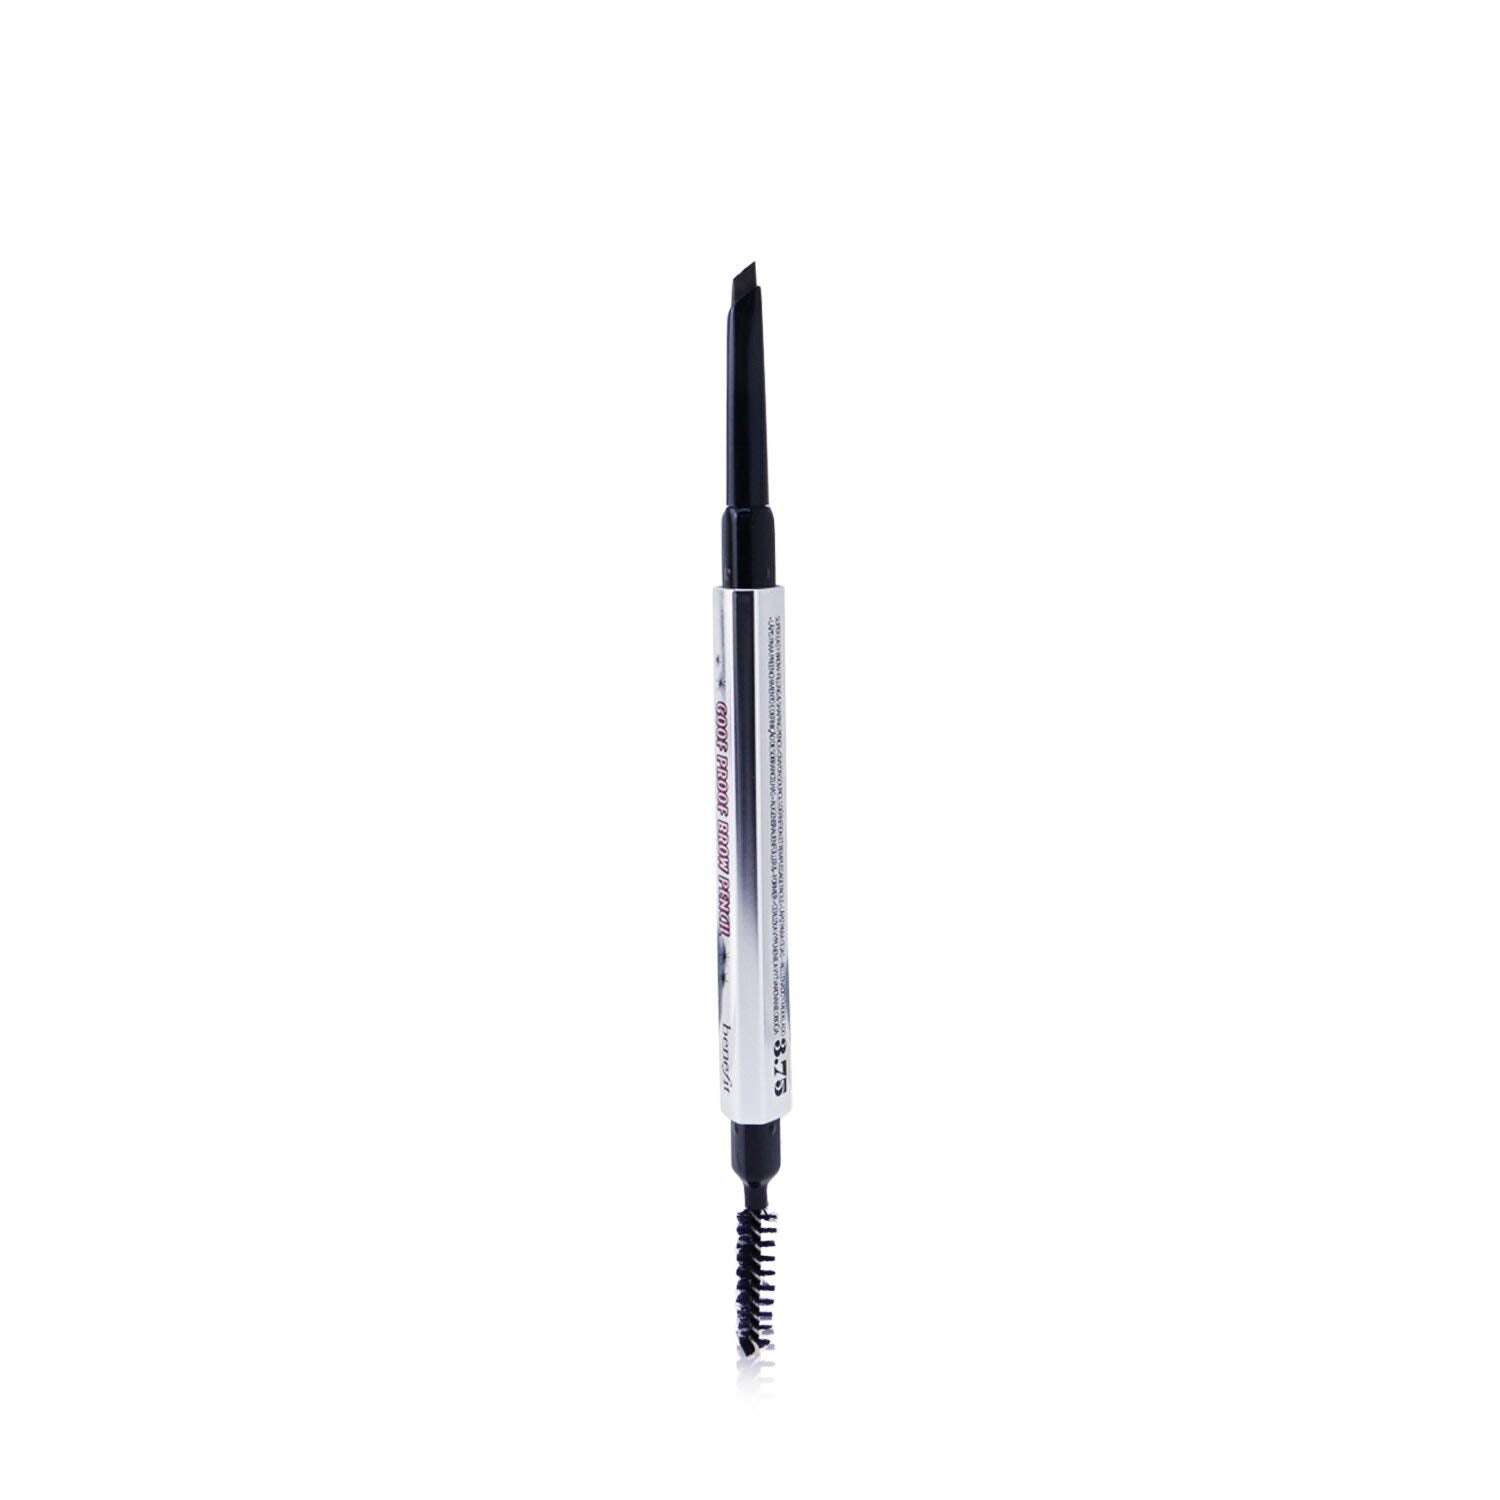 Benefit Cosmetics Goof Proof Waterproof Easy Shape & Fill Eyebrow Pencil 3.75